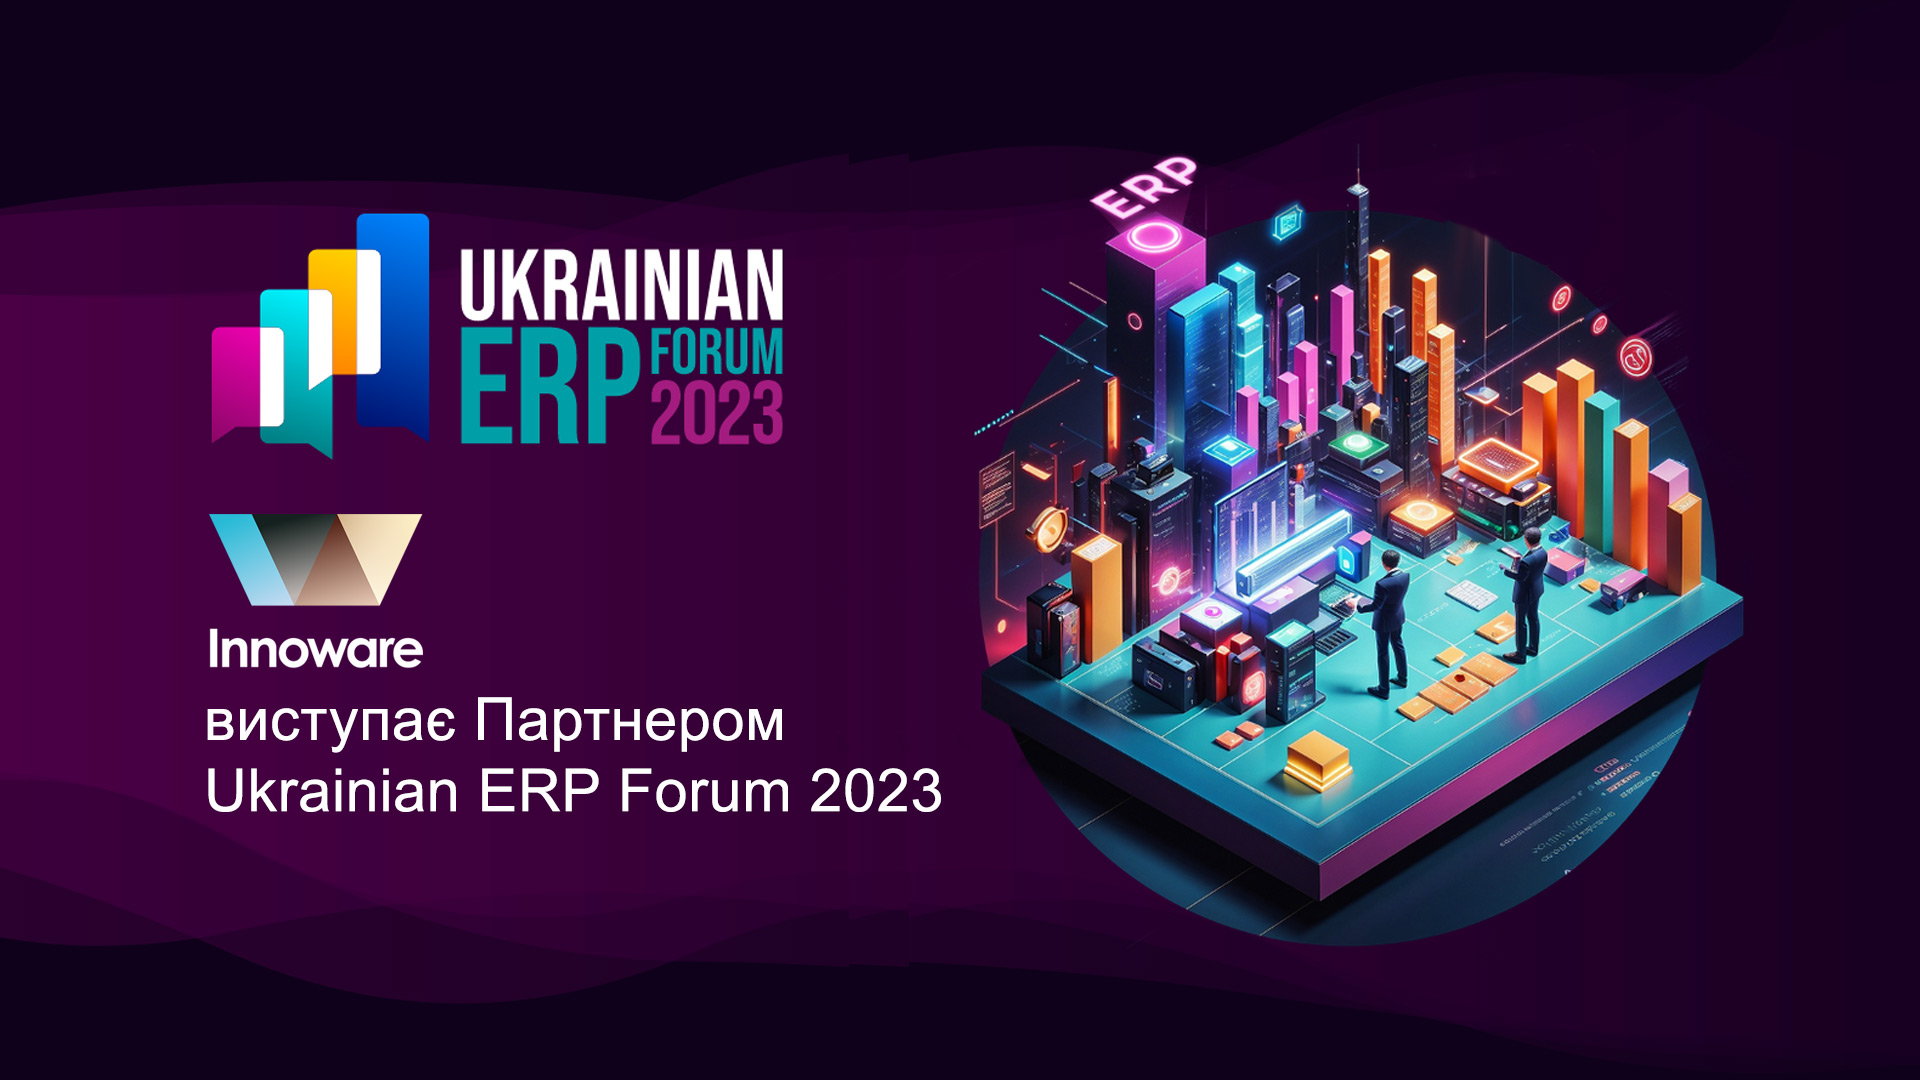 Іnnoware – Партнер Ukrainian ERP Forum 2023